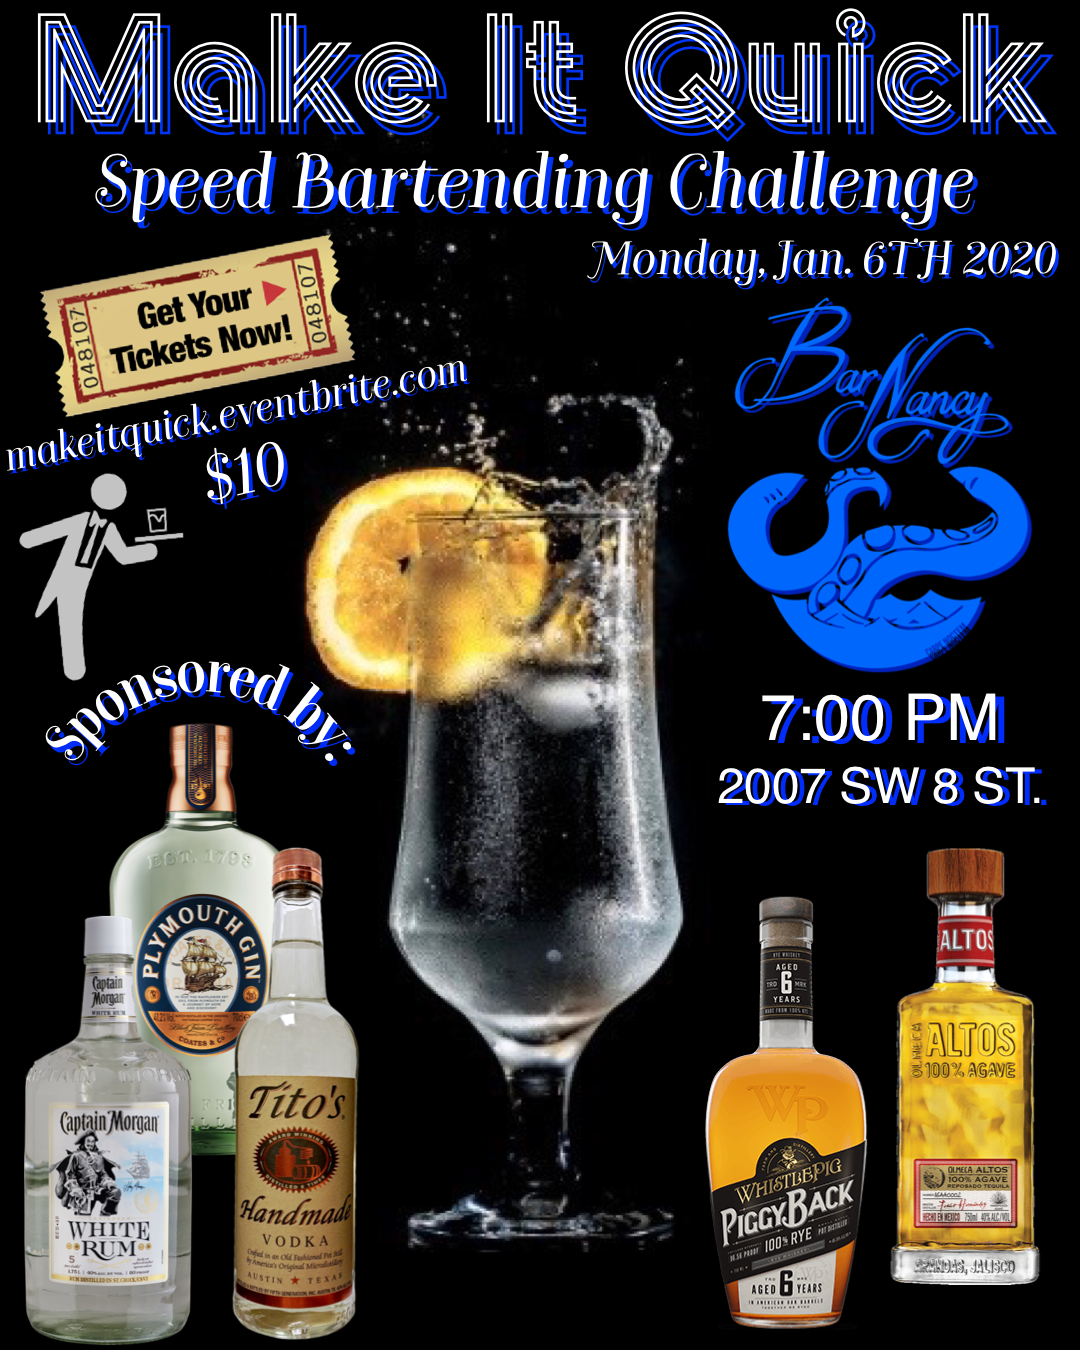 Make it Quick - Speed Bartending Challenge @ Bar Nancy